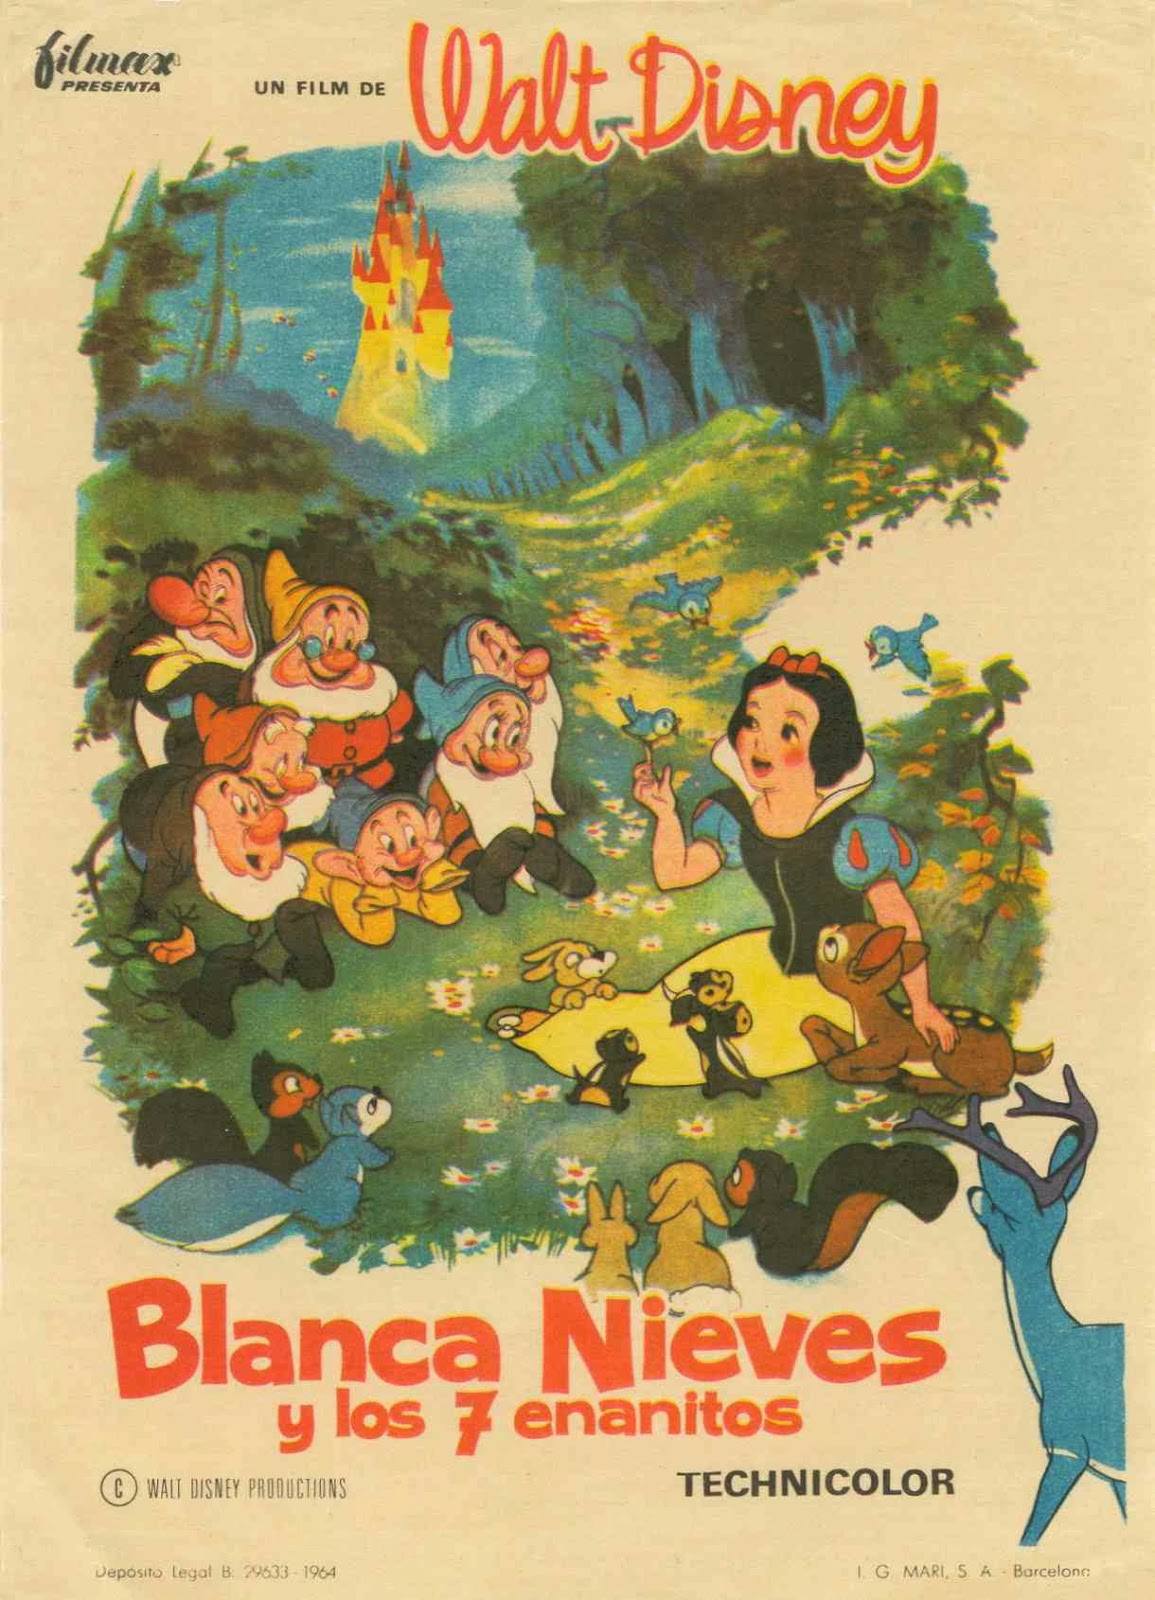 Blancanieves Y Los Siete Enanitos [Dvdrip][Spanish]